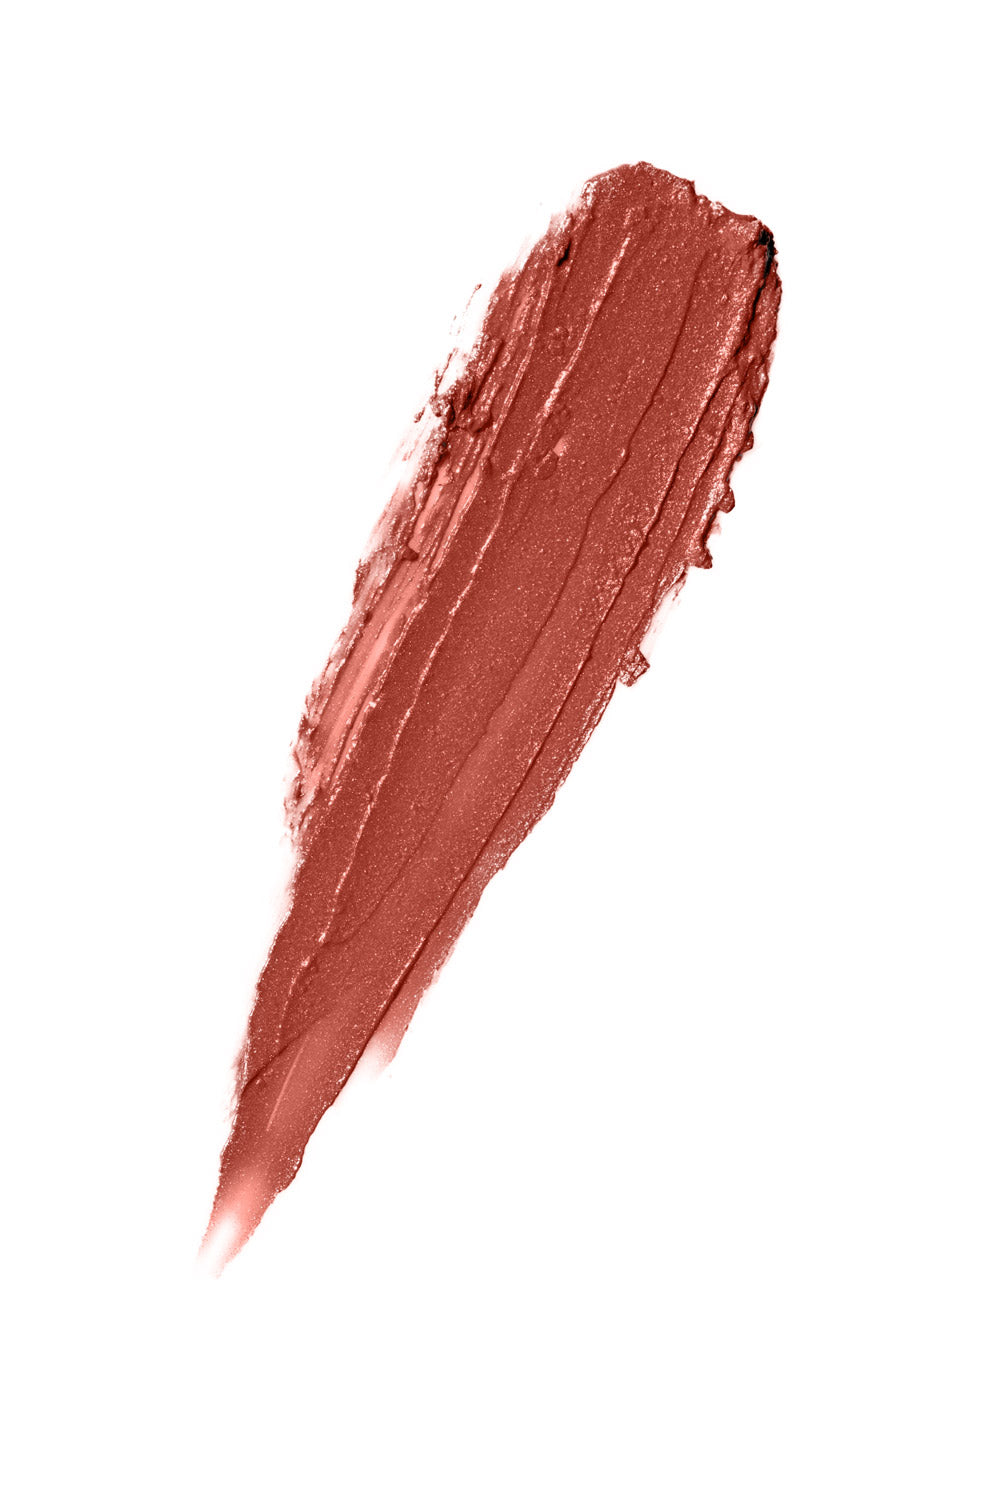 Russet Brown - Type 3 Lipstick